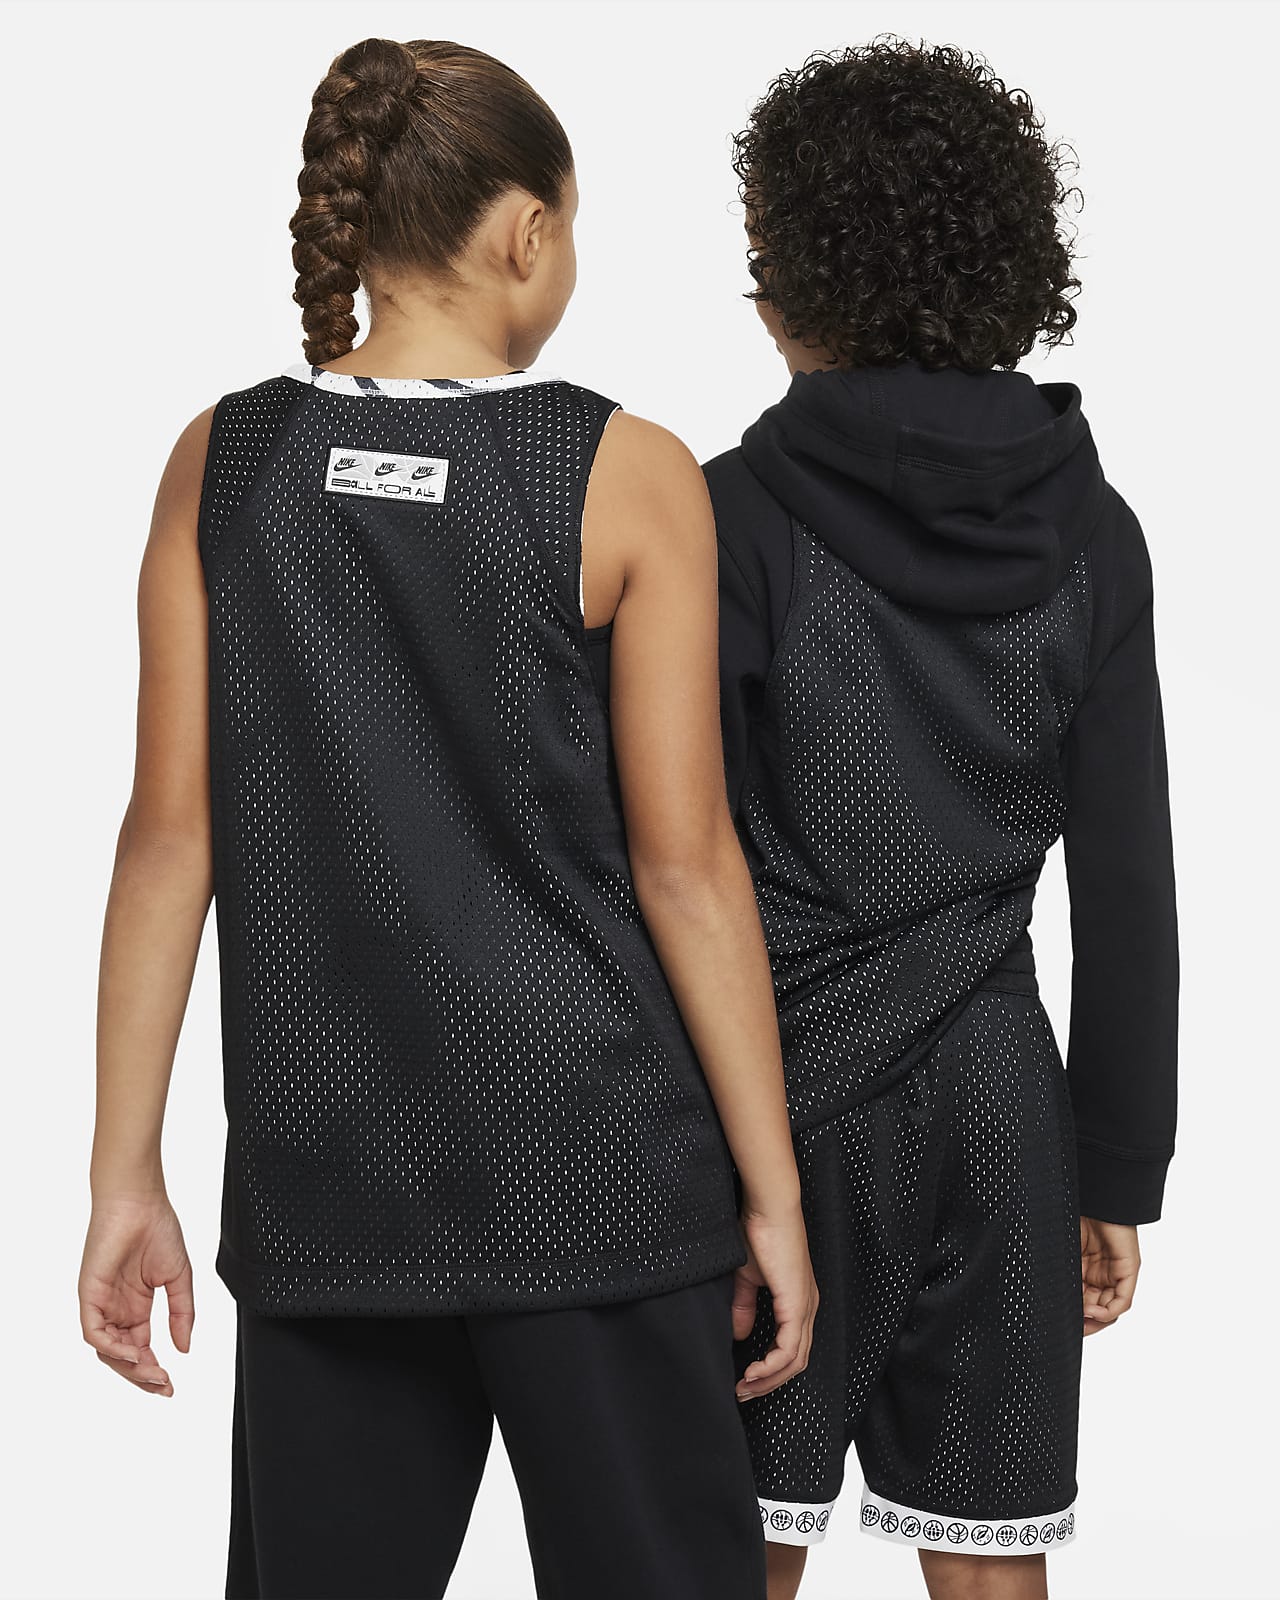 Nike Culture of Basketball Camiseta de baloncesto reversible - Niño/a. ES